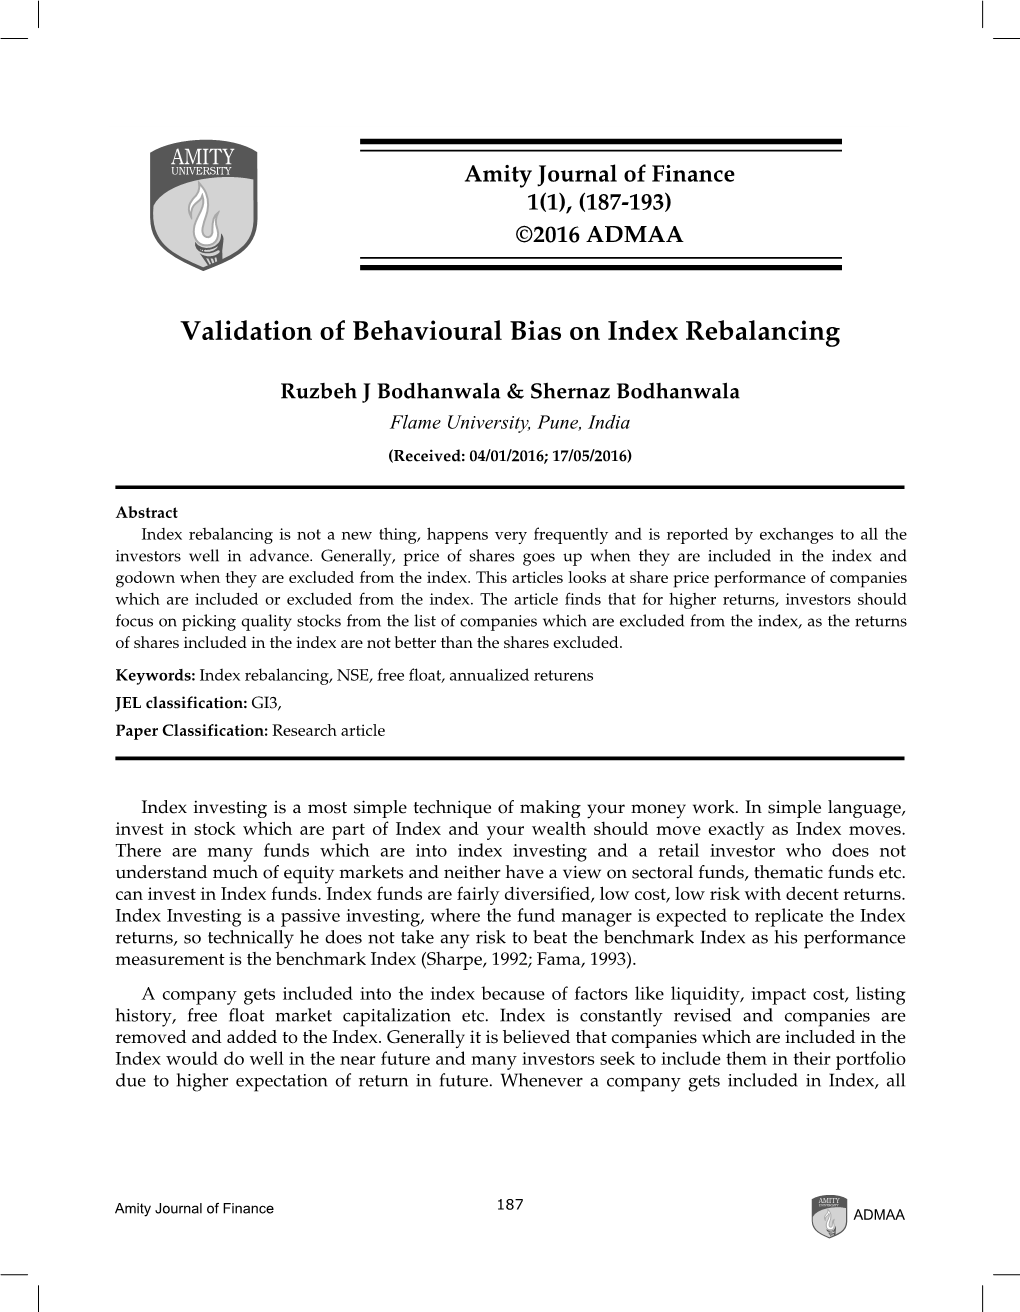 Validation of Behavioural Bias on Index Rebalancing